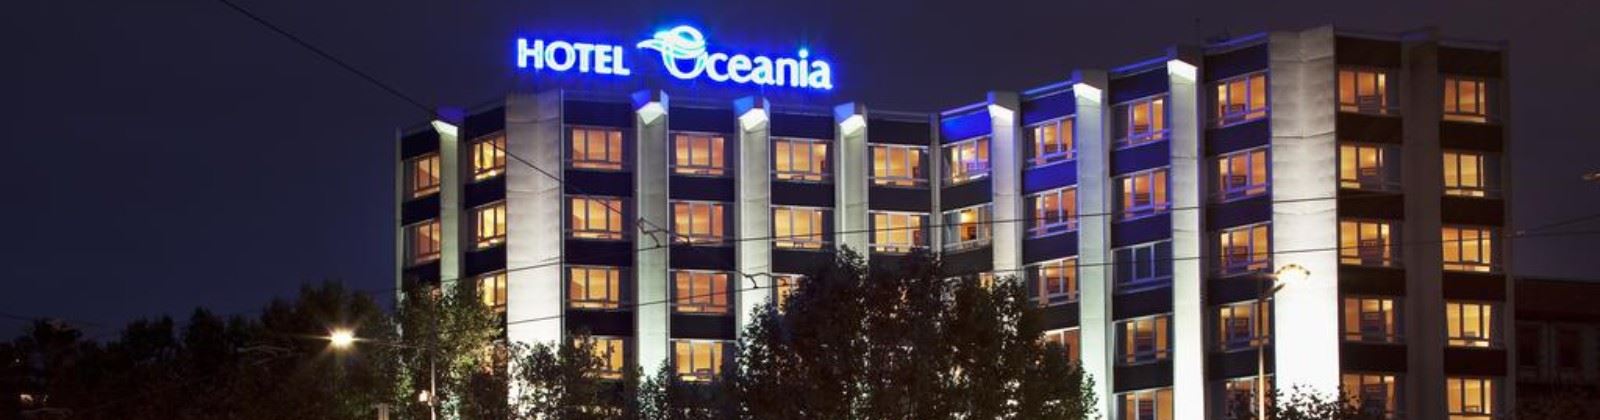 OLEVENE image - oceania-clermont-ferrand-olevene-hotel-restaurant-reunion-meeting-convention-